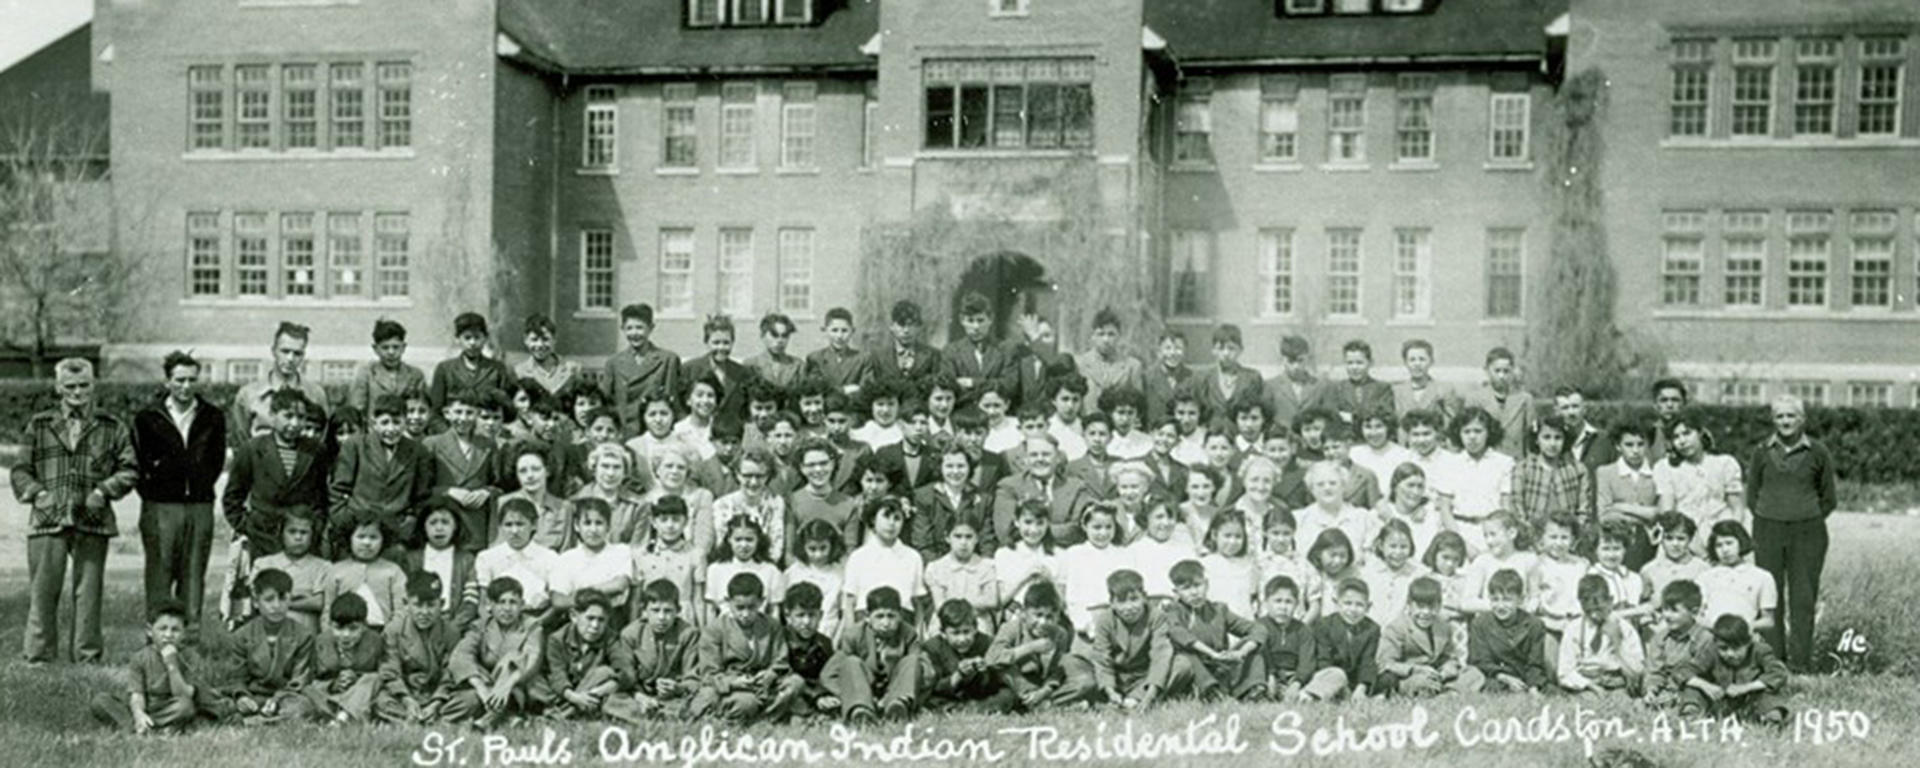 St. Paul’s Residential School, Blood Reserve, 1950.